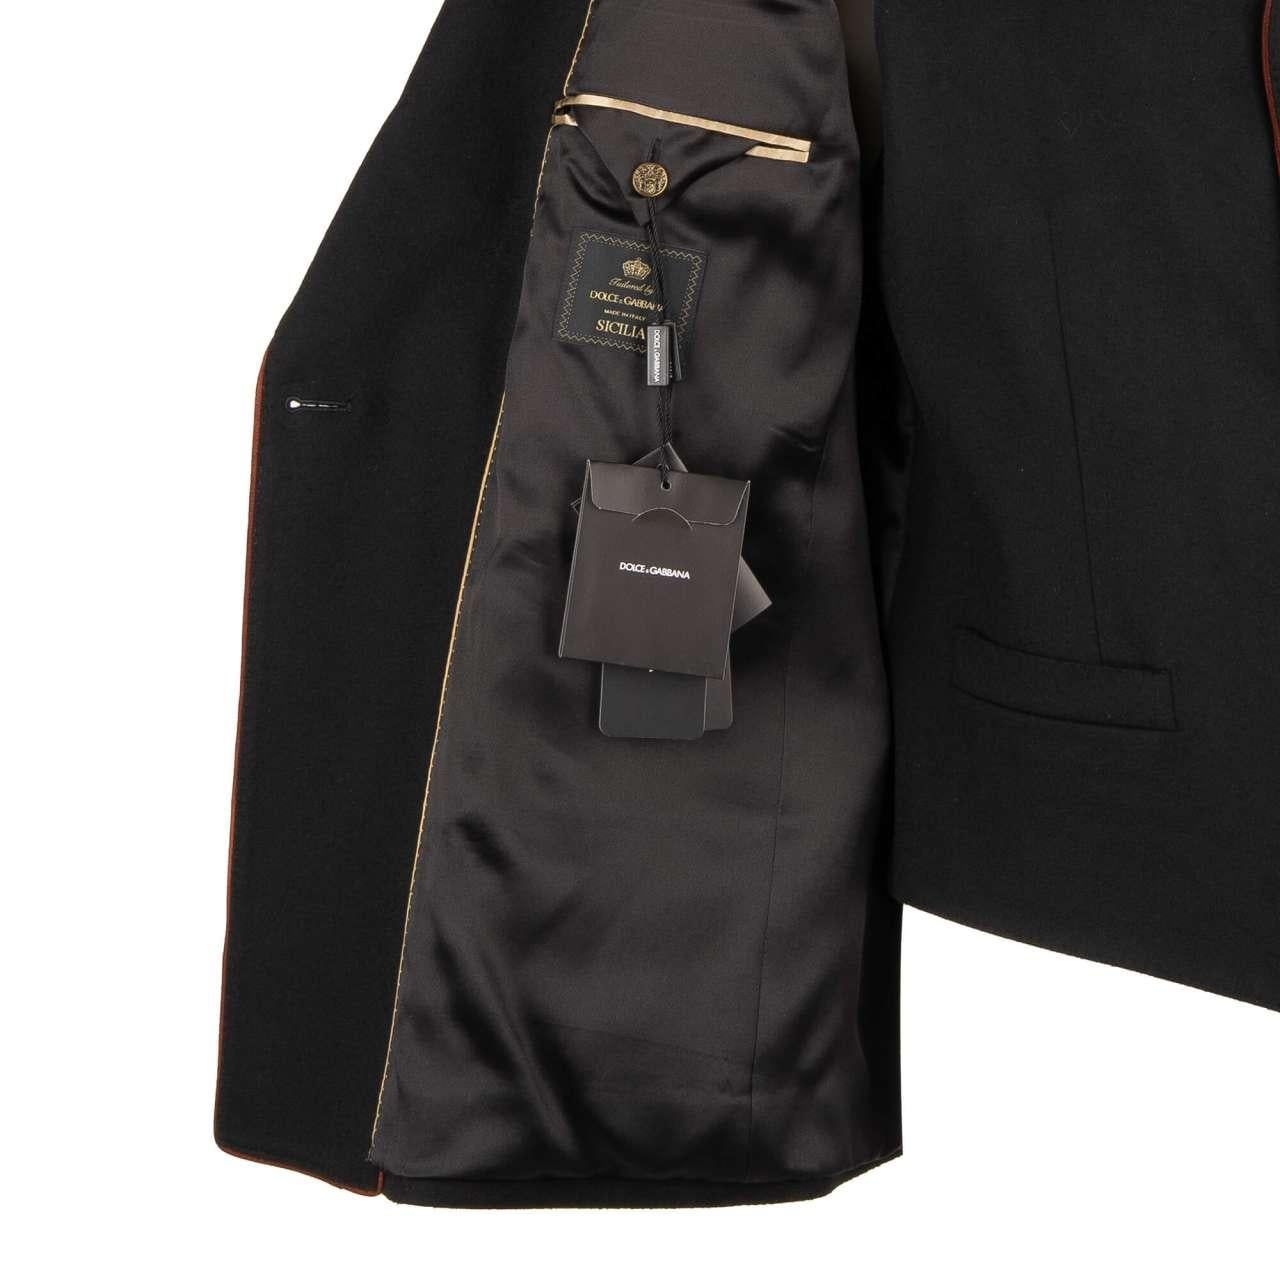 D&G Cashmere Jacket Vest Ensemble SICILIA with Embroidered Logo Crown Black 54 For Sale 5